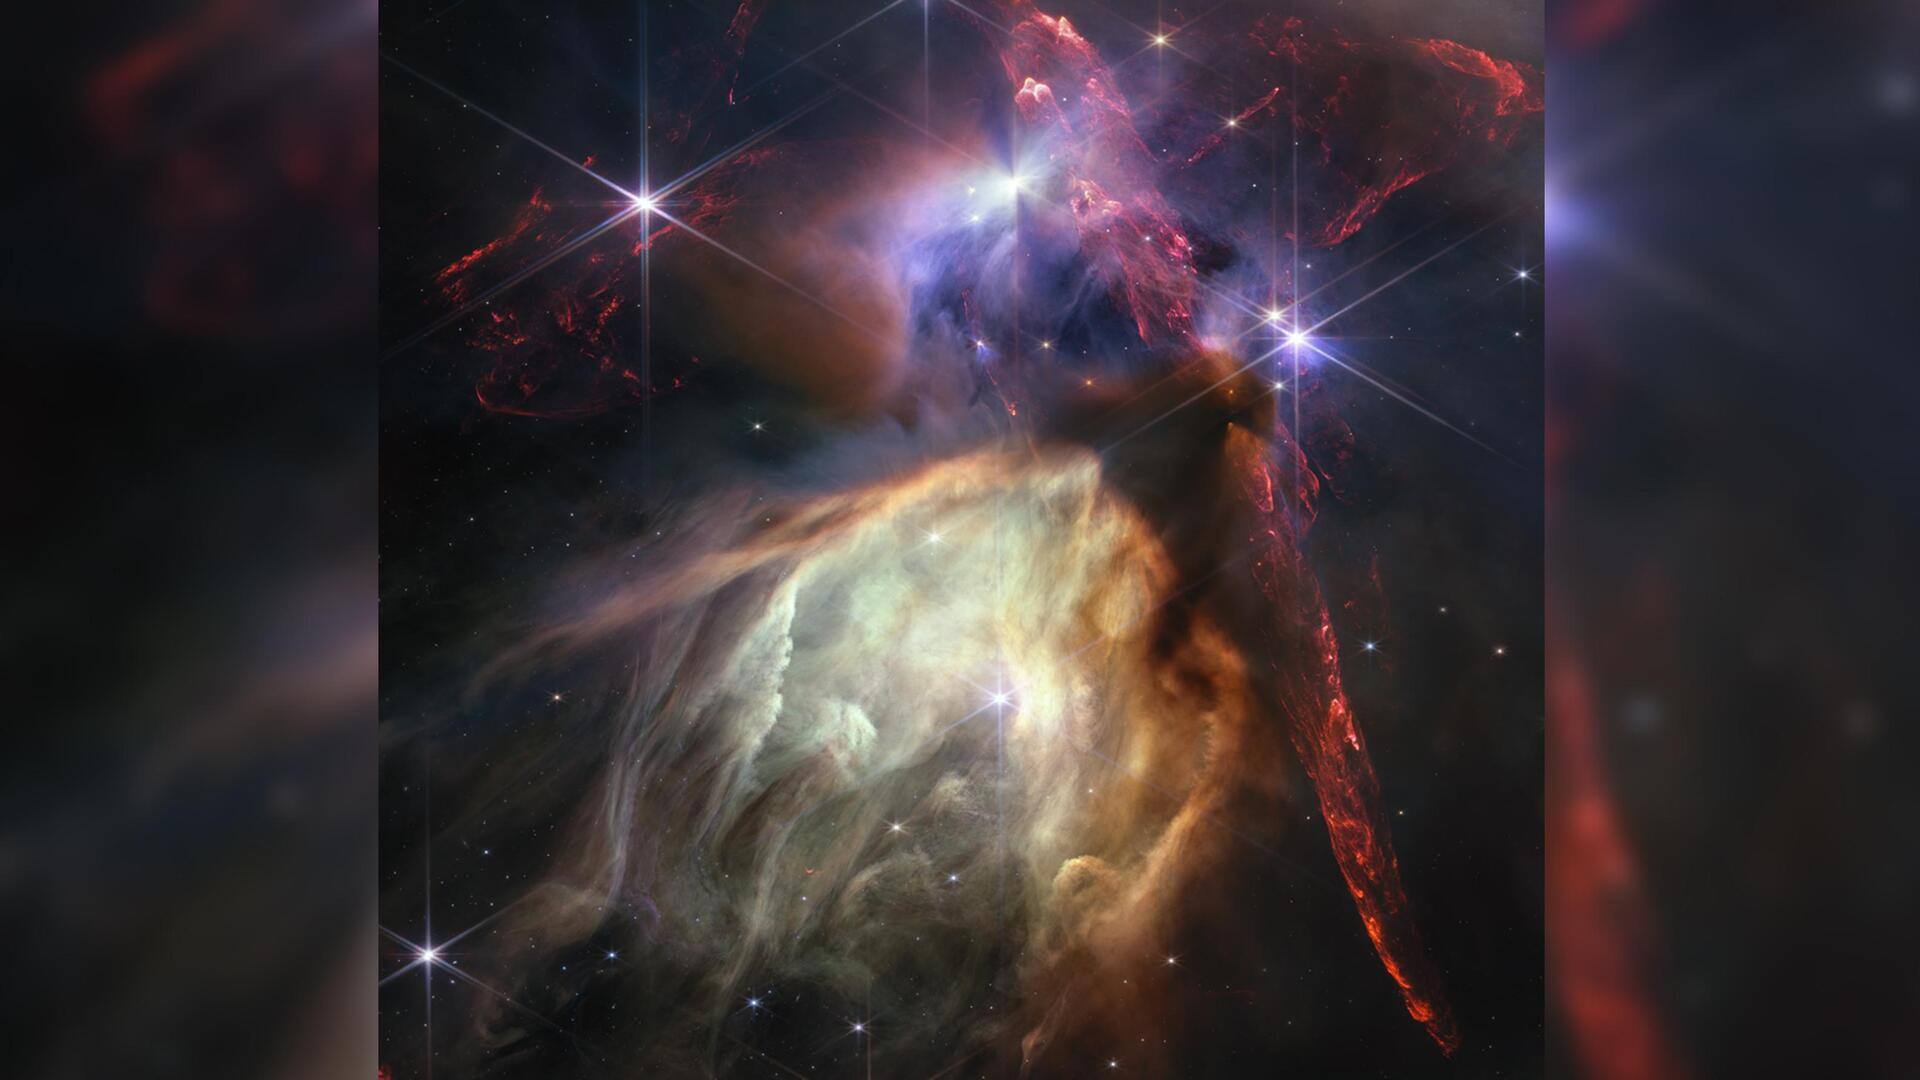 JWST's 1-year anniversary: NASA shares spectacular image of star-forming region